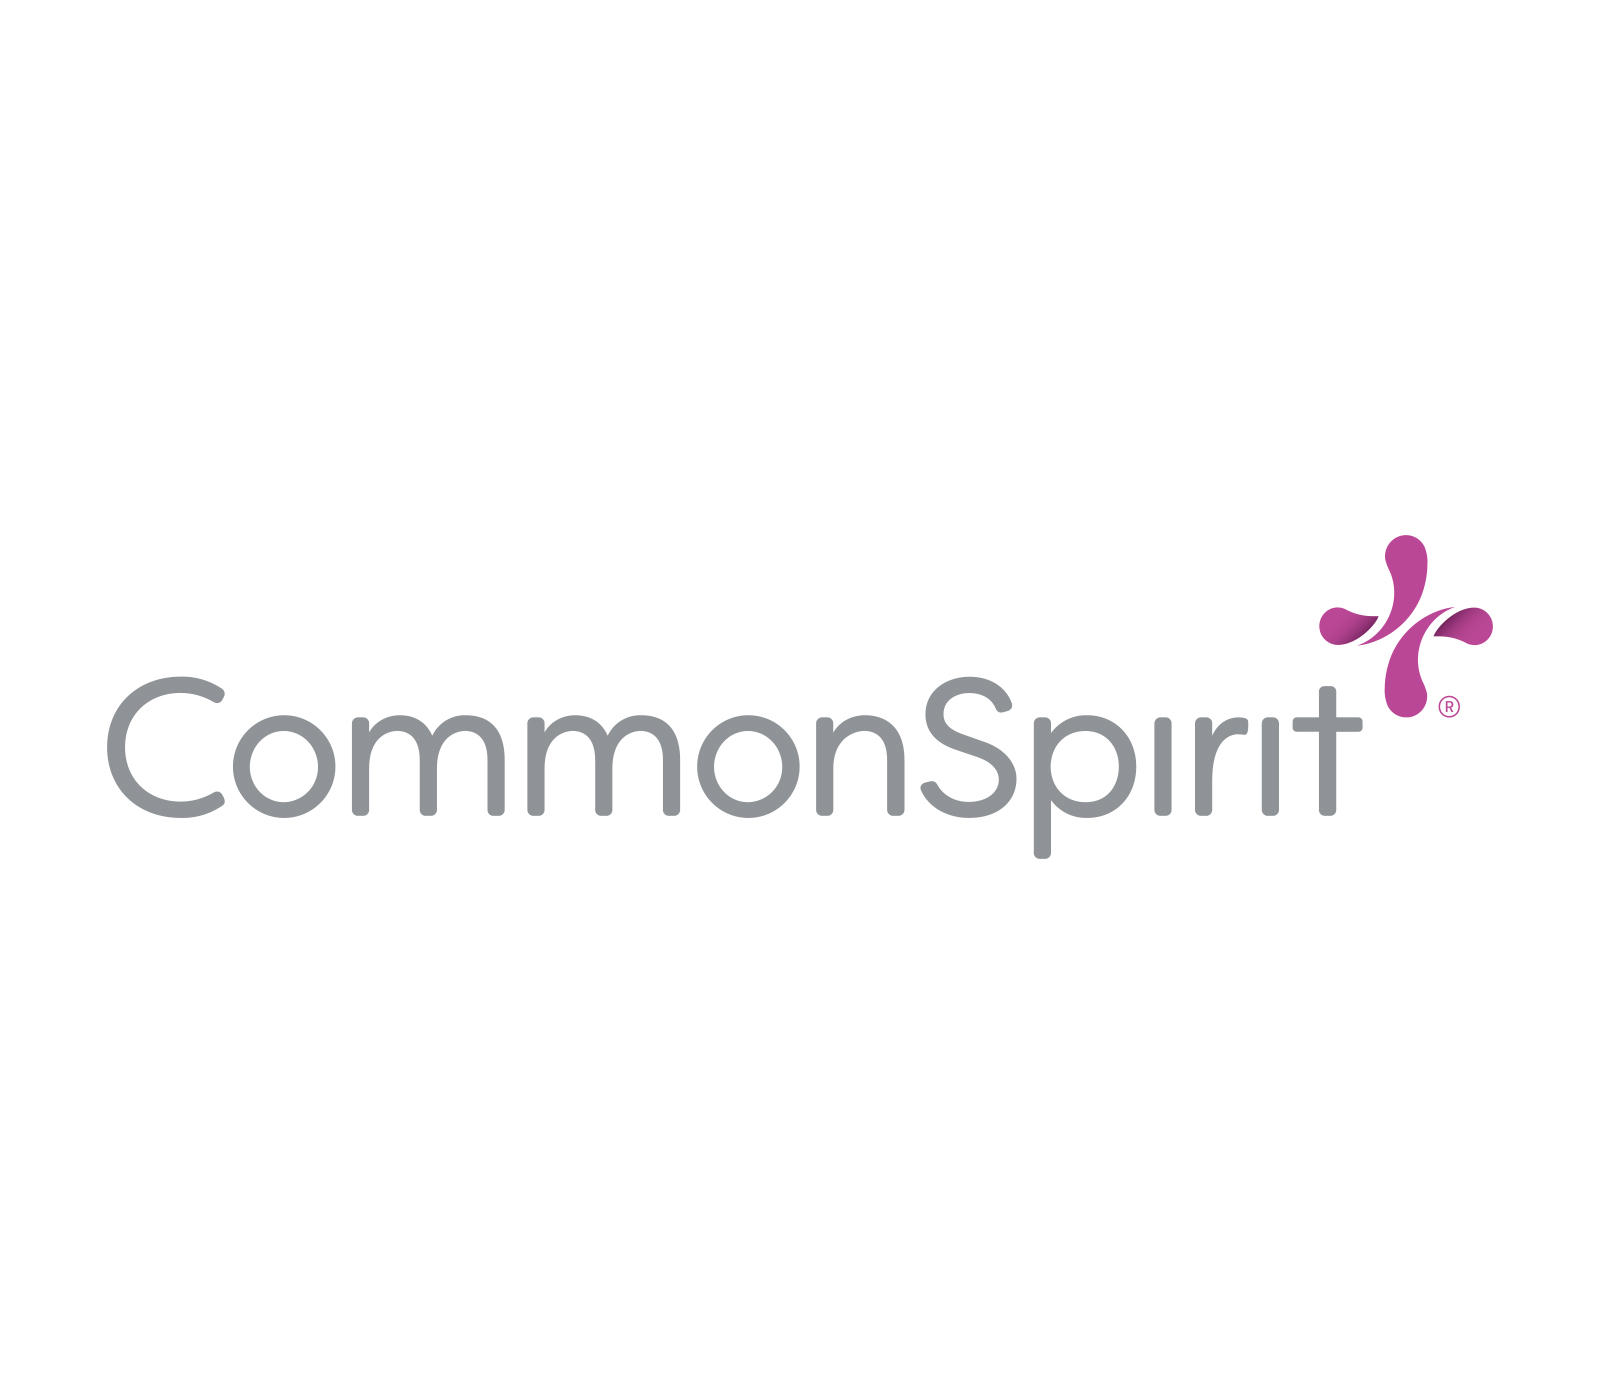 Common Spirit